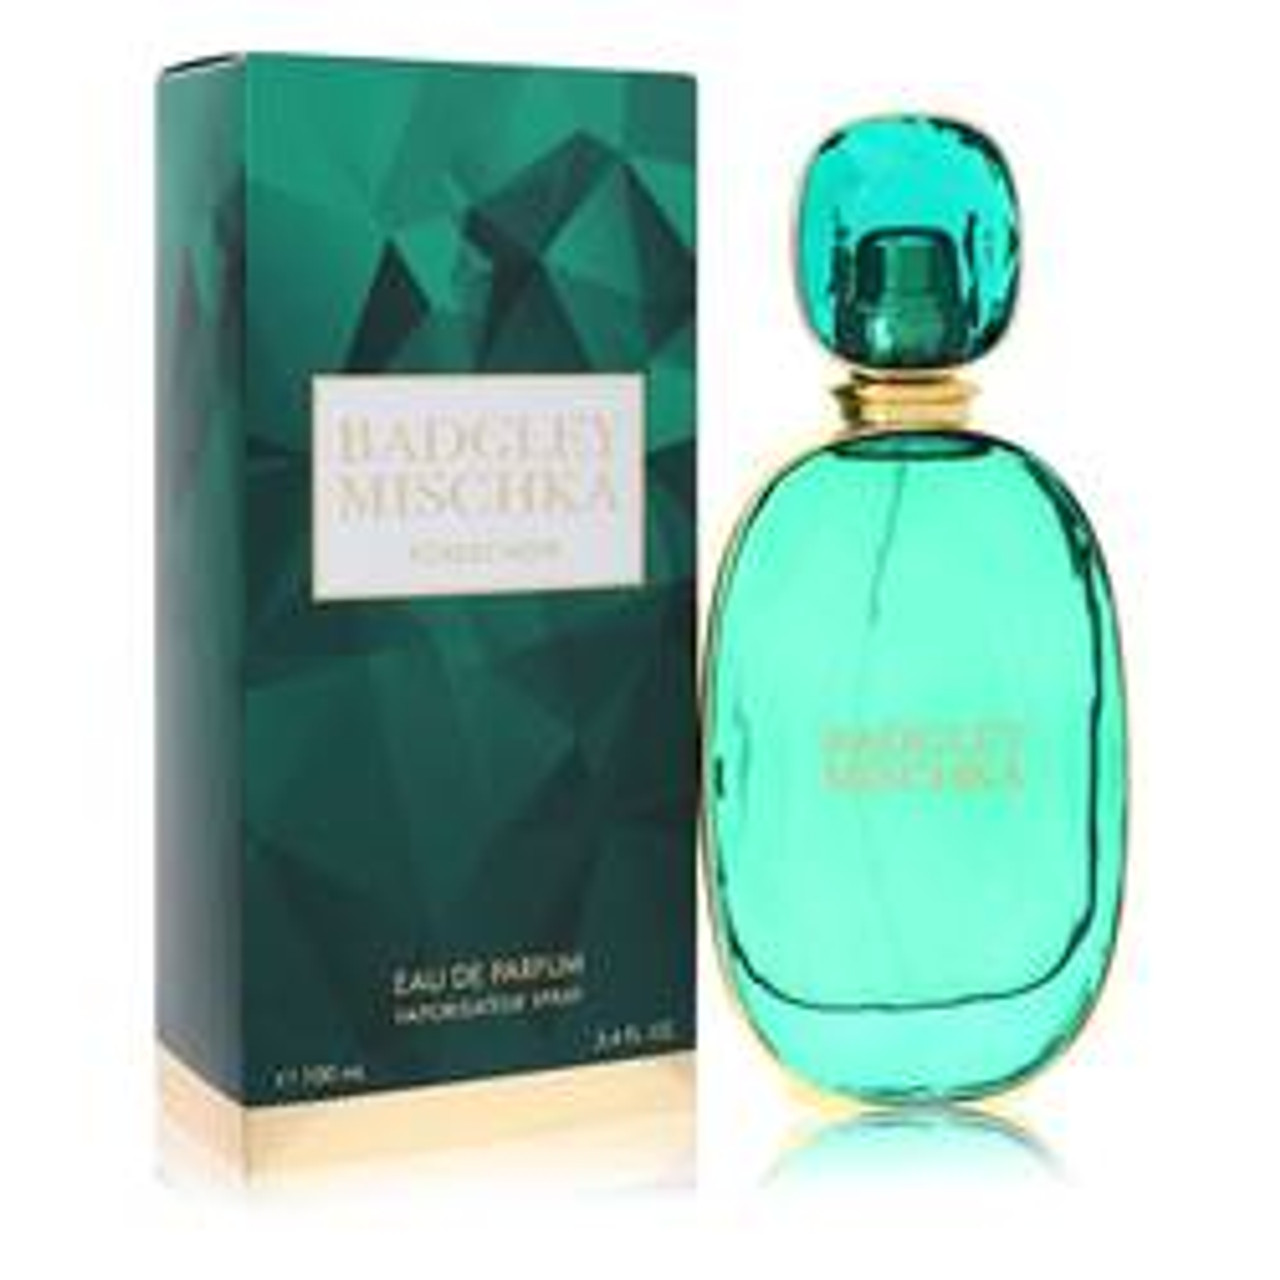 Badgley Mischka Forest Noir Perfume By Badgley Mischka Eau De Parfum Spray 3.4 oz for Women - [From 120.00 - Choose pk Qty ] - *Ships from Miami